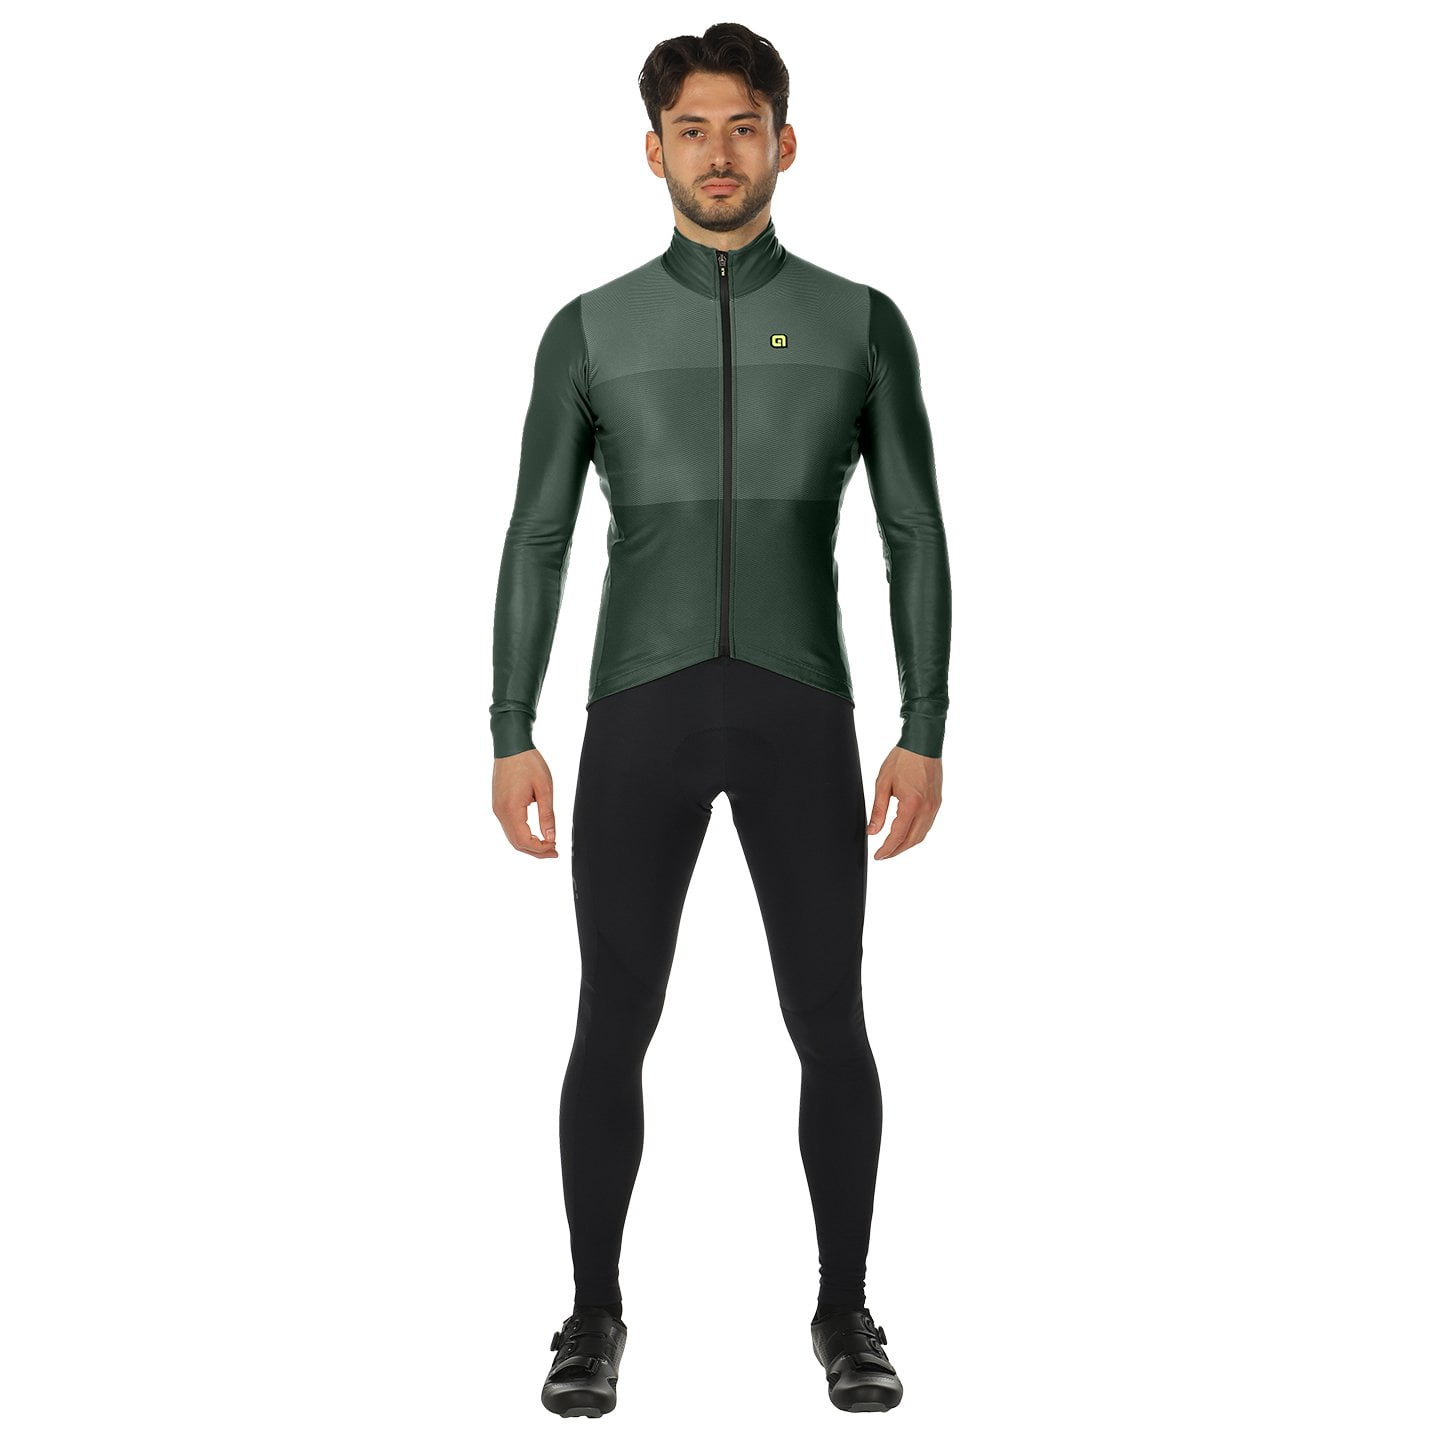 ALE Sfida Set (winter jacket + cycling tights) Set (2 pieces), for men